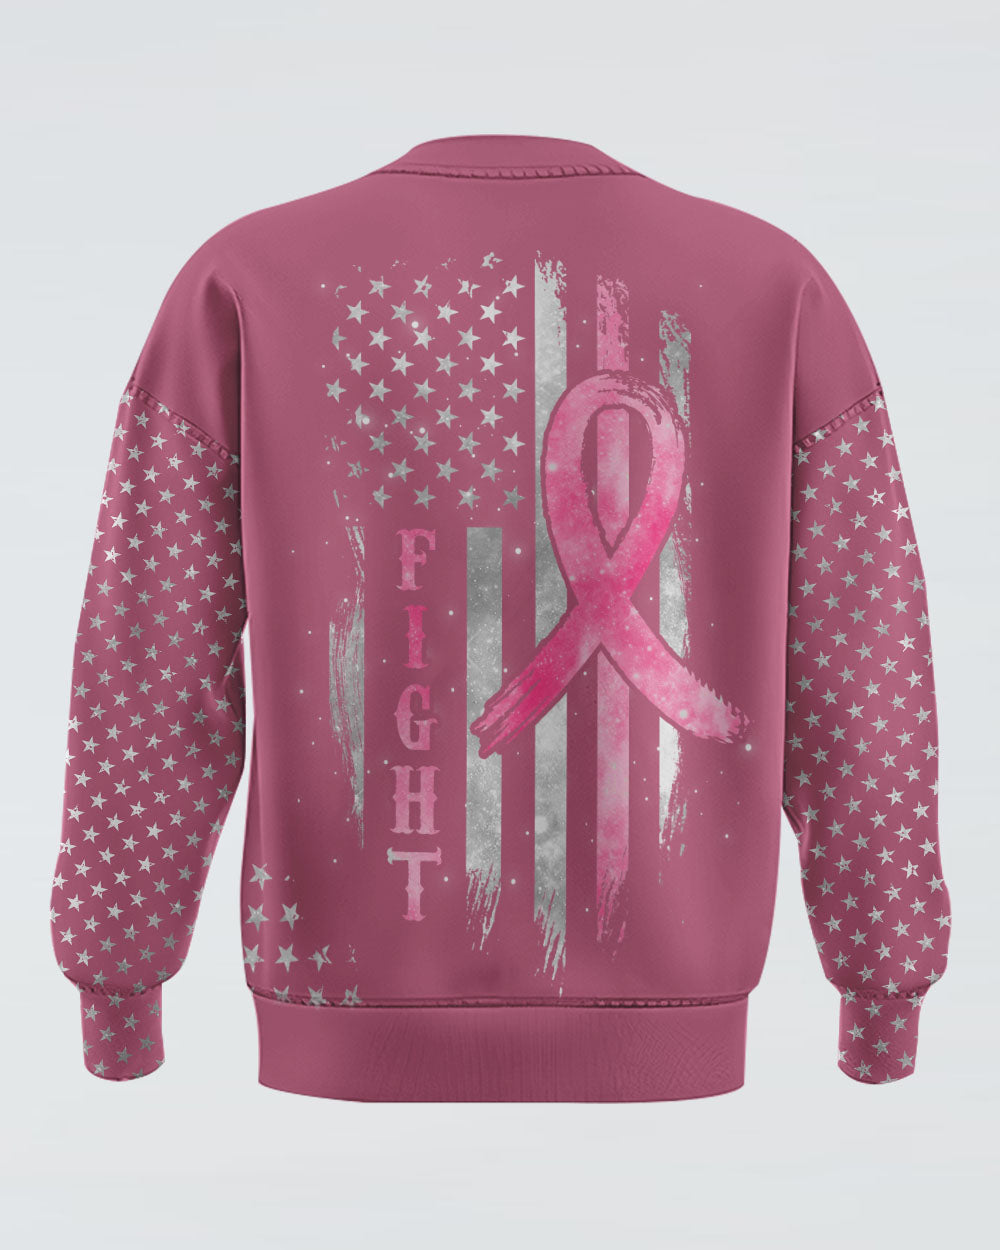 Fight Ribbon Silver Galaxy Flag Women's Breast Cancer Awareness Sweatshirt